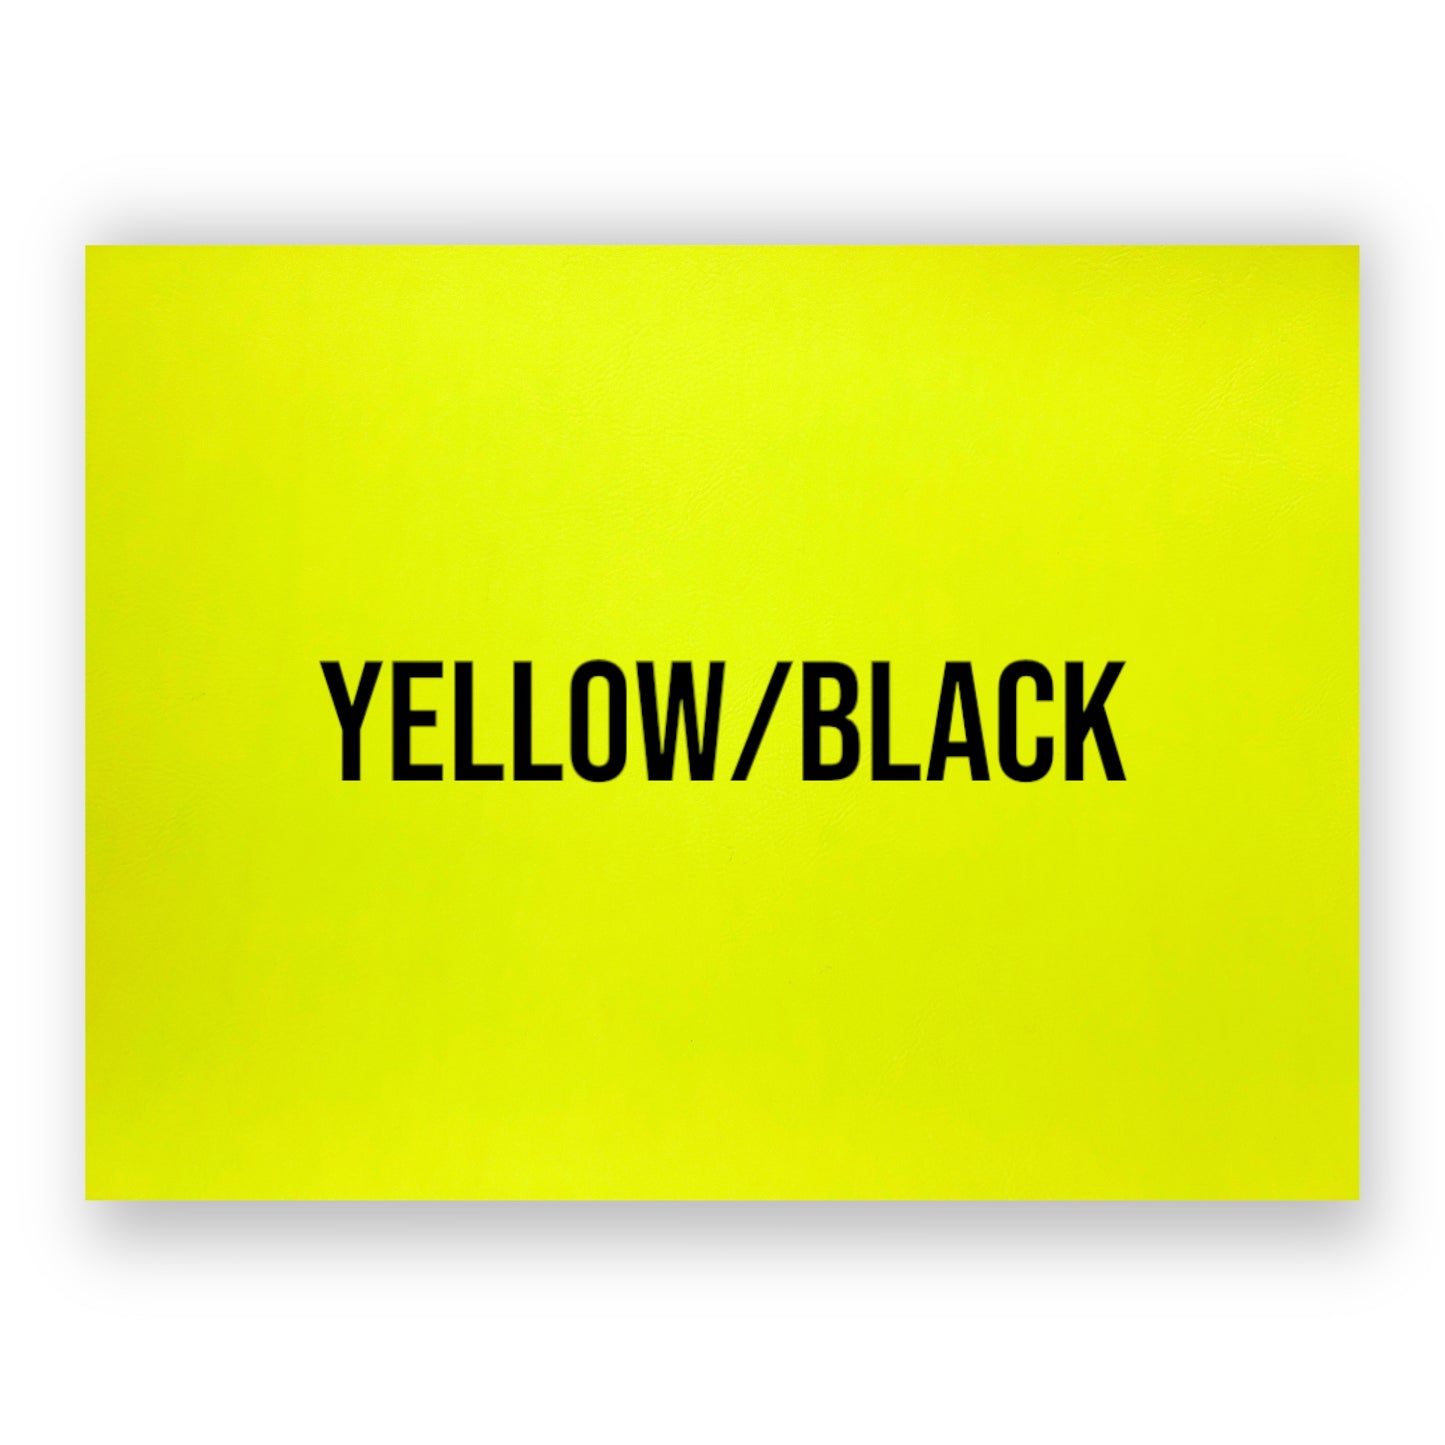 YELLOW/BLACK HYDBOND LEATHERETTE SHEET (12"x24")